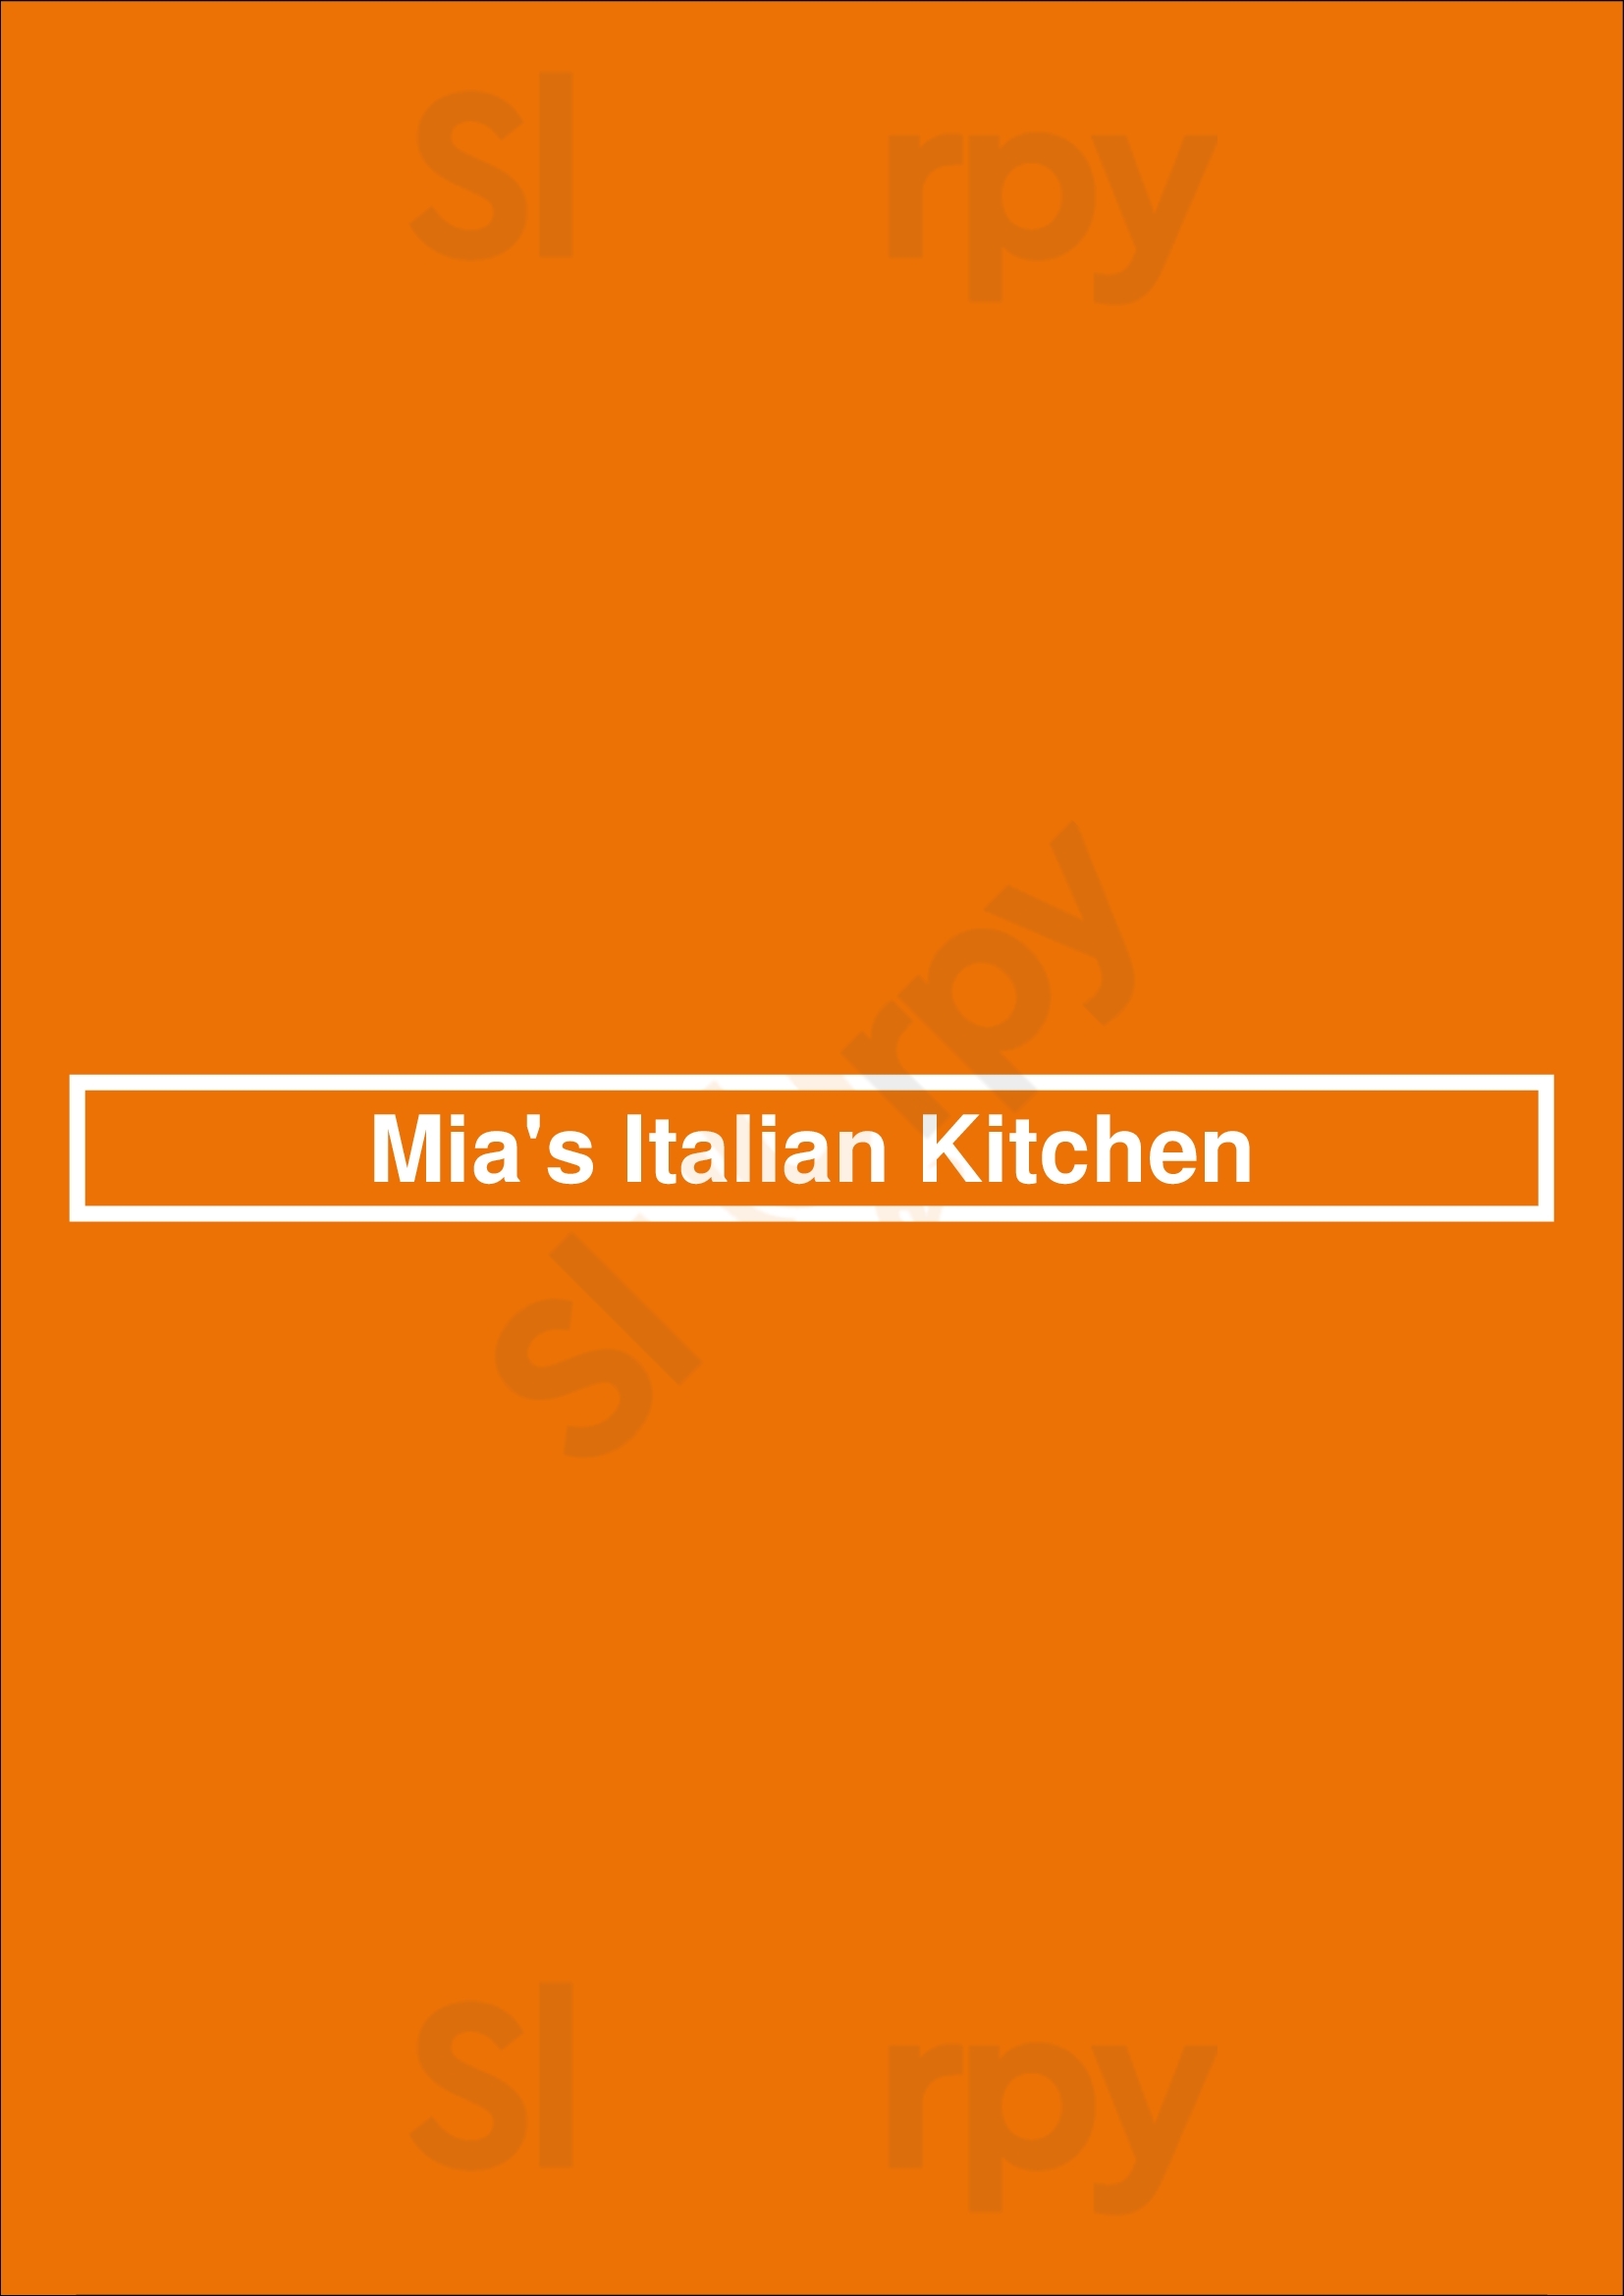 Mia's Italian Kitchen - Orlando Orlando Menu - 1